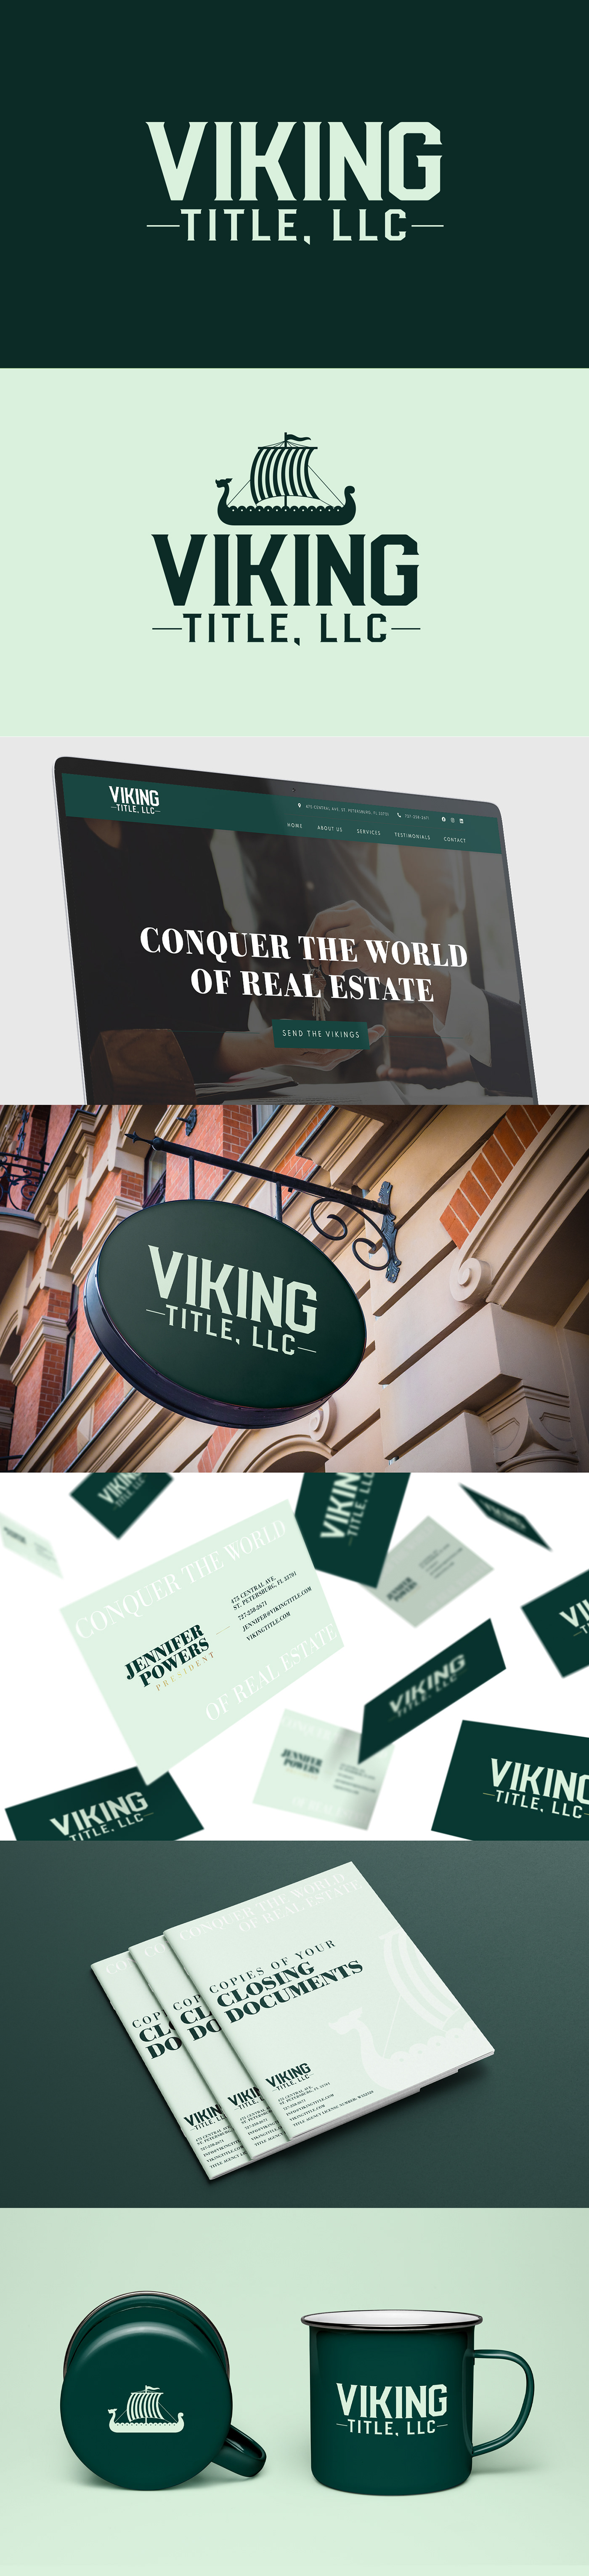 Viking Title Company Branding